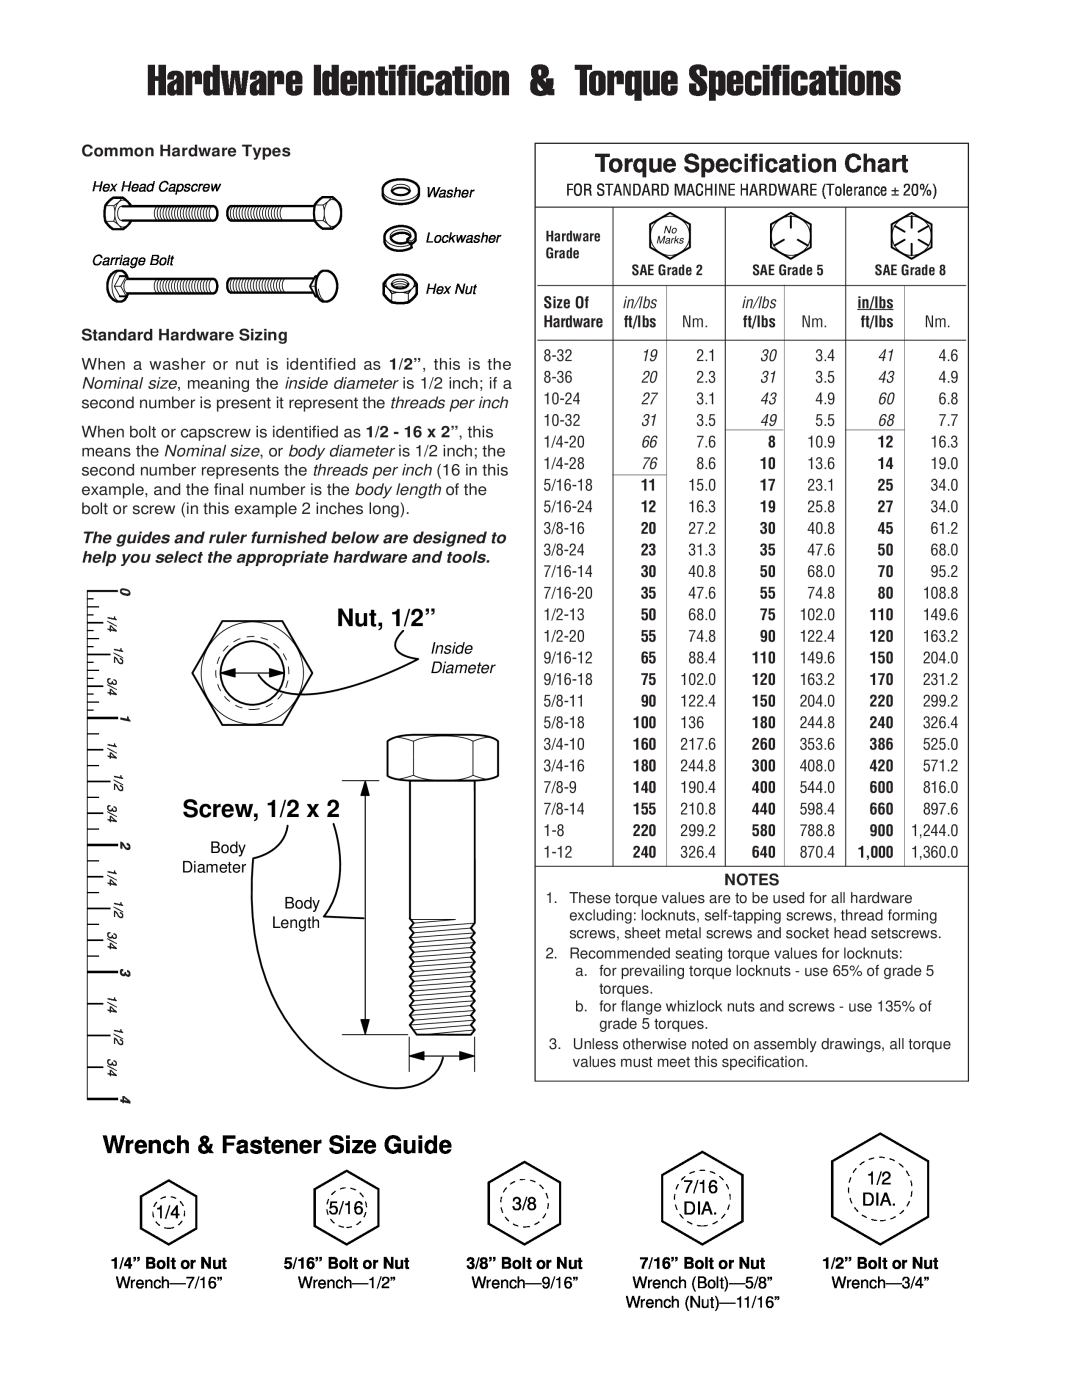 Simplicity 1694296 Hardware Identification & Torque Specifications, Torque Specification Chart, Nut, 1/2”, Screw, 1/2 